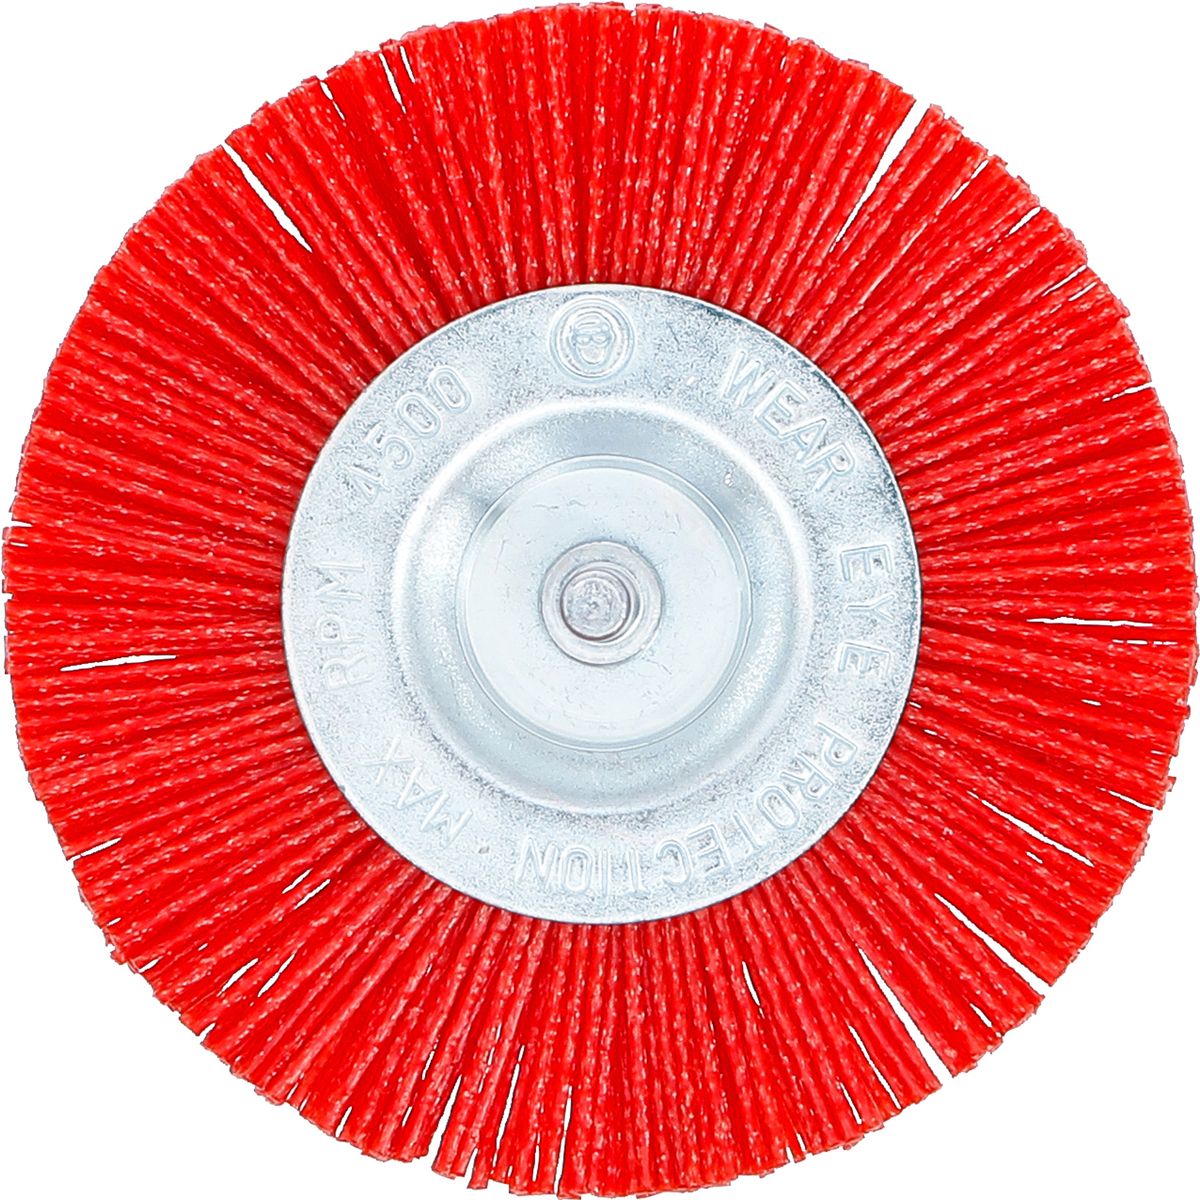 Nylon Brush | 100 mm | 6 mm Shaft